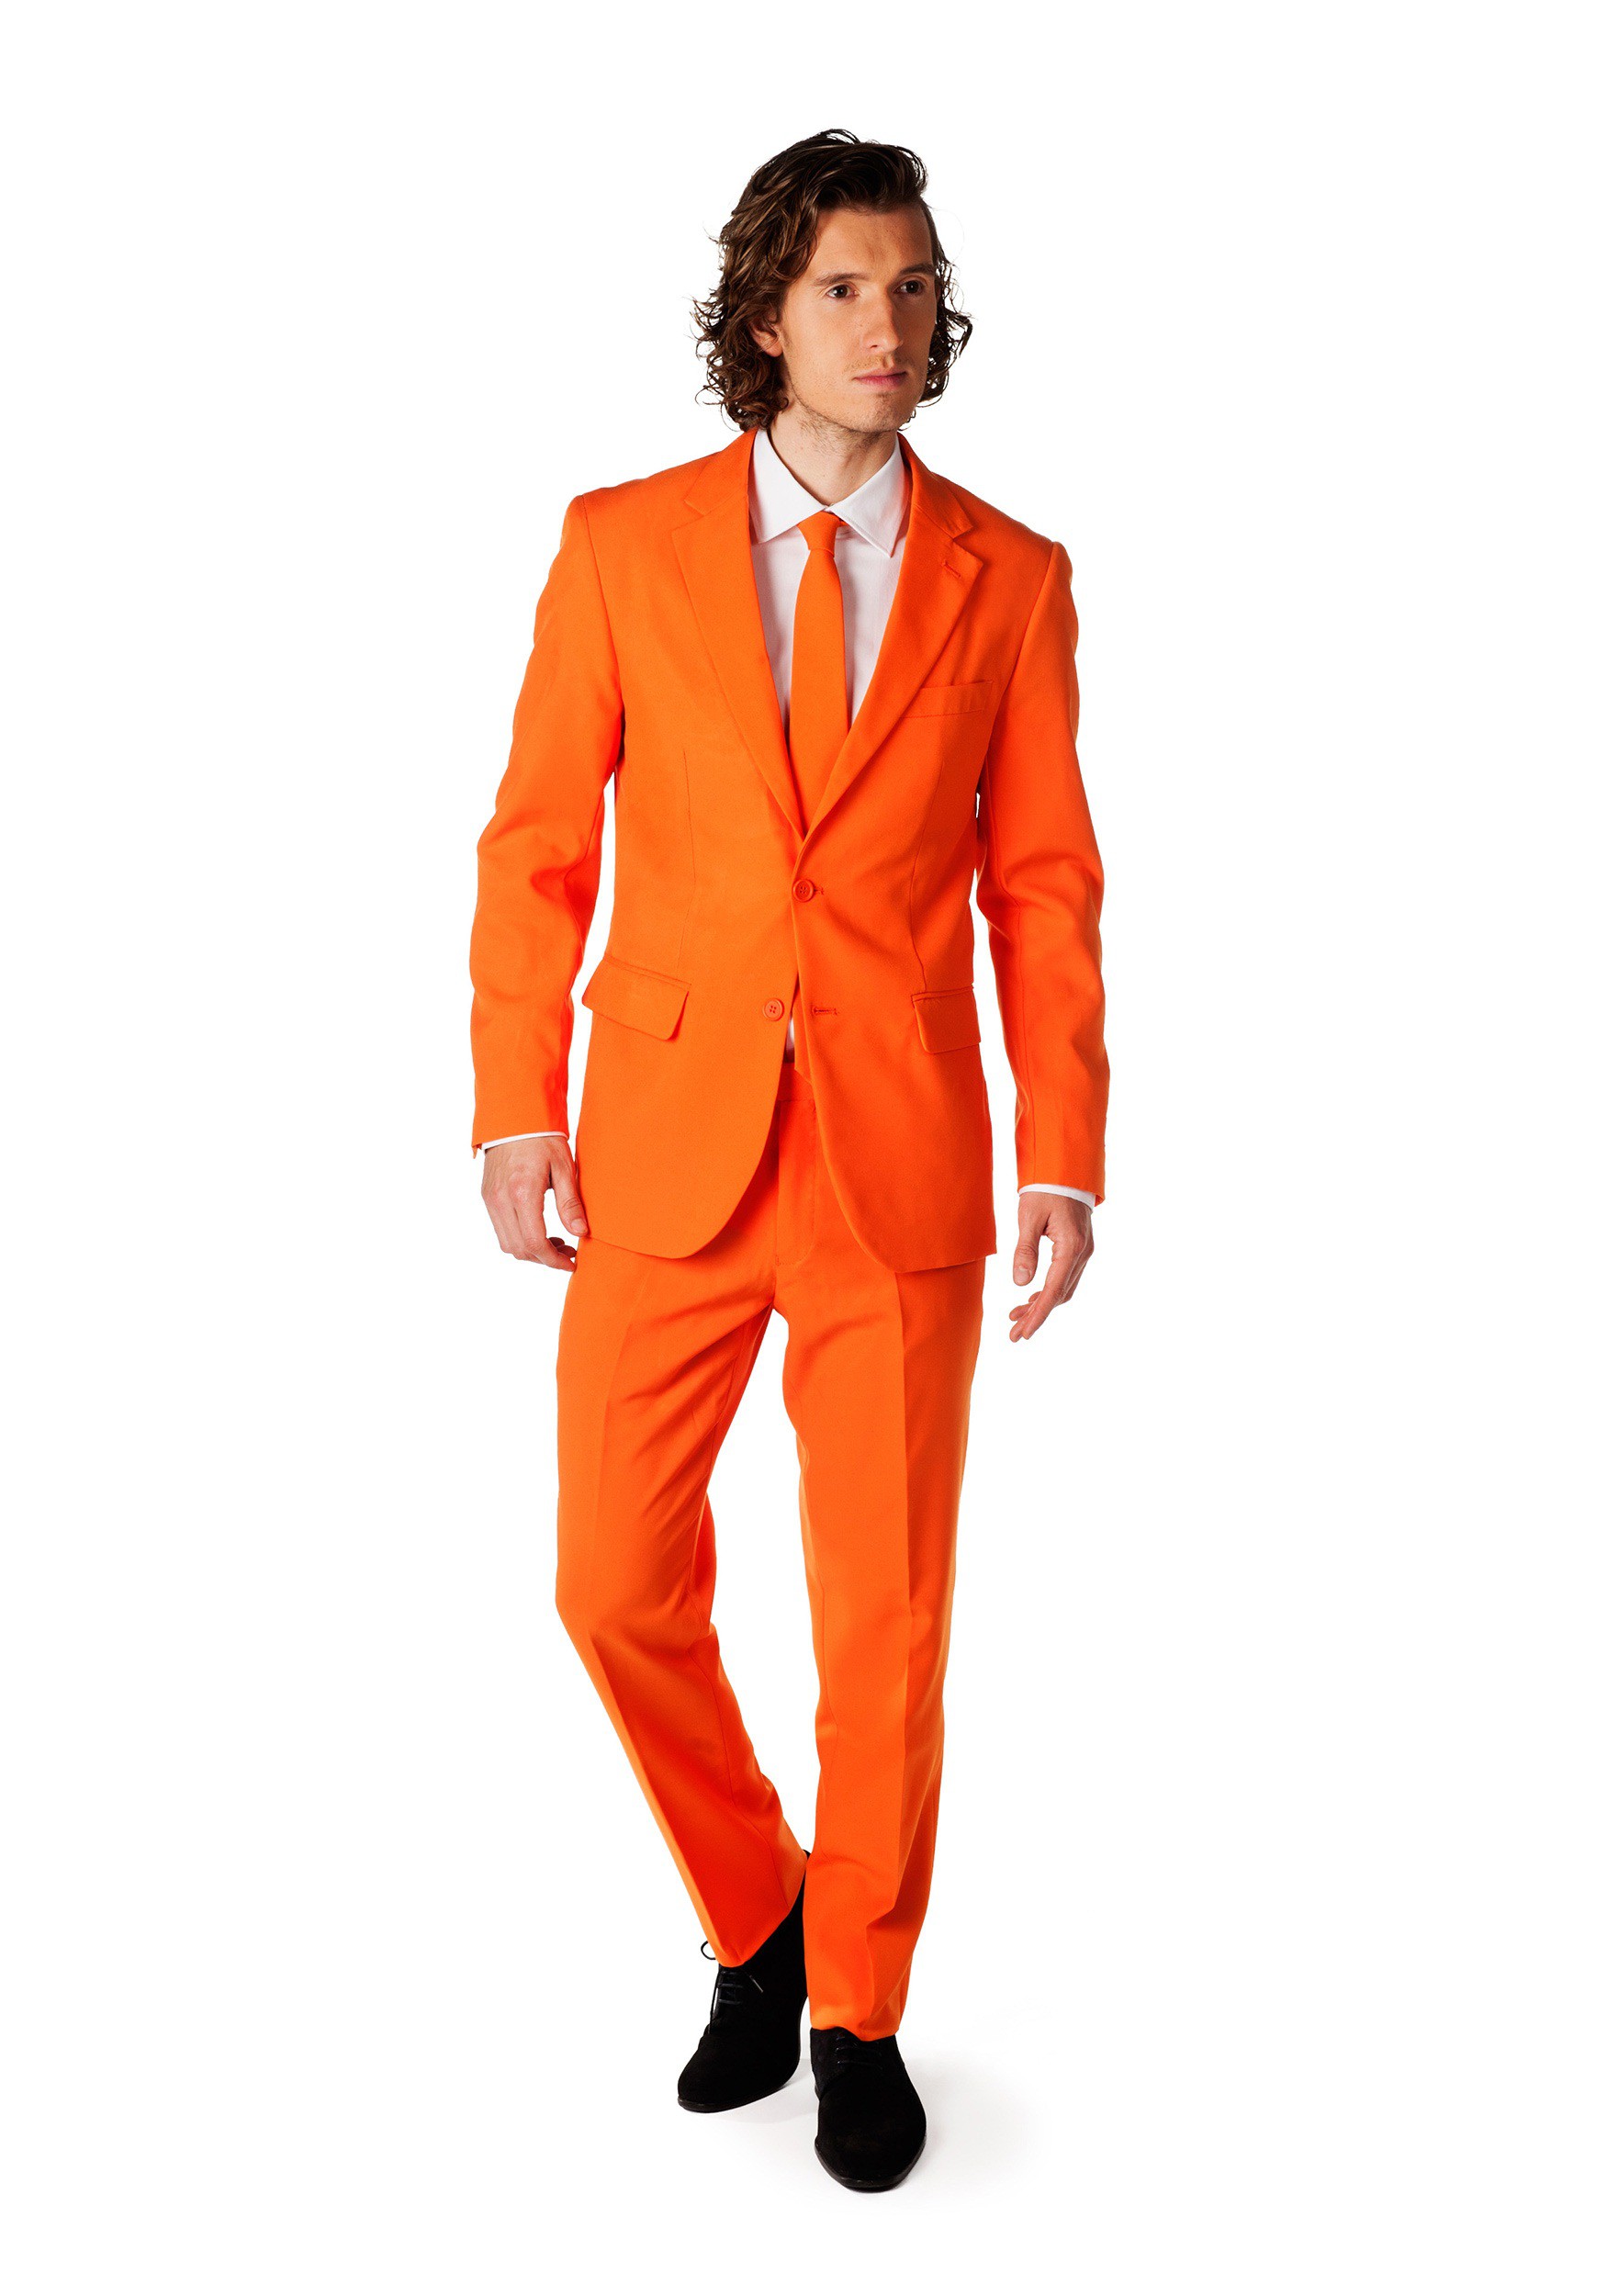 Image of OppoSuits Orange Costume Suit for Men ID OSOSUI0001-38